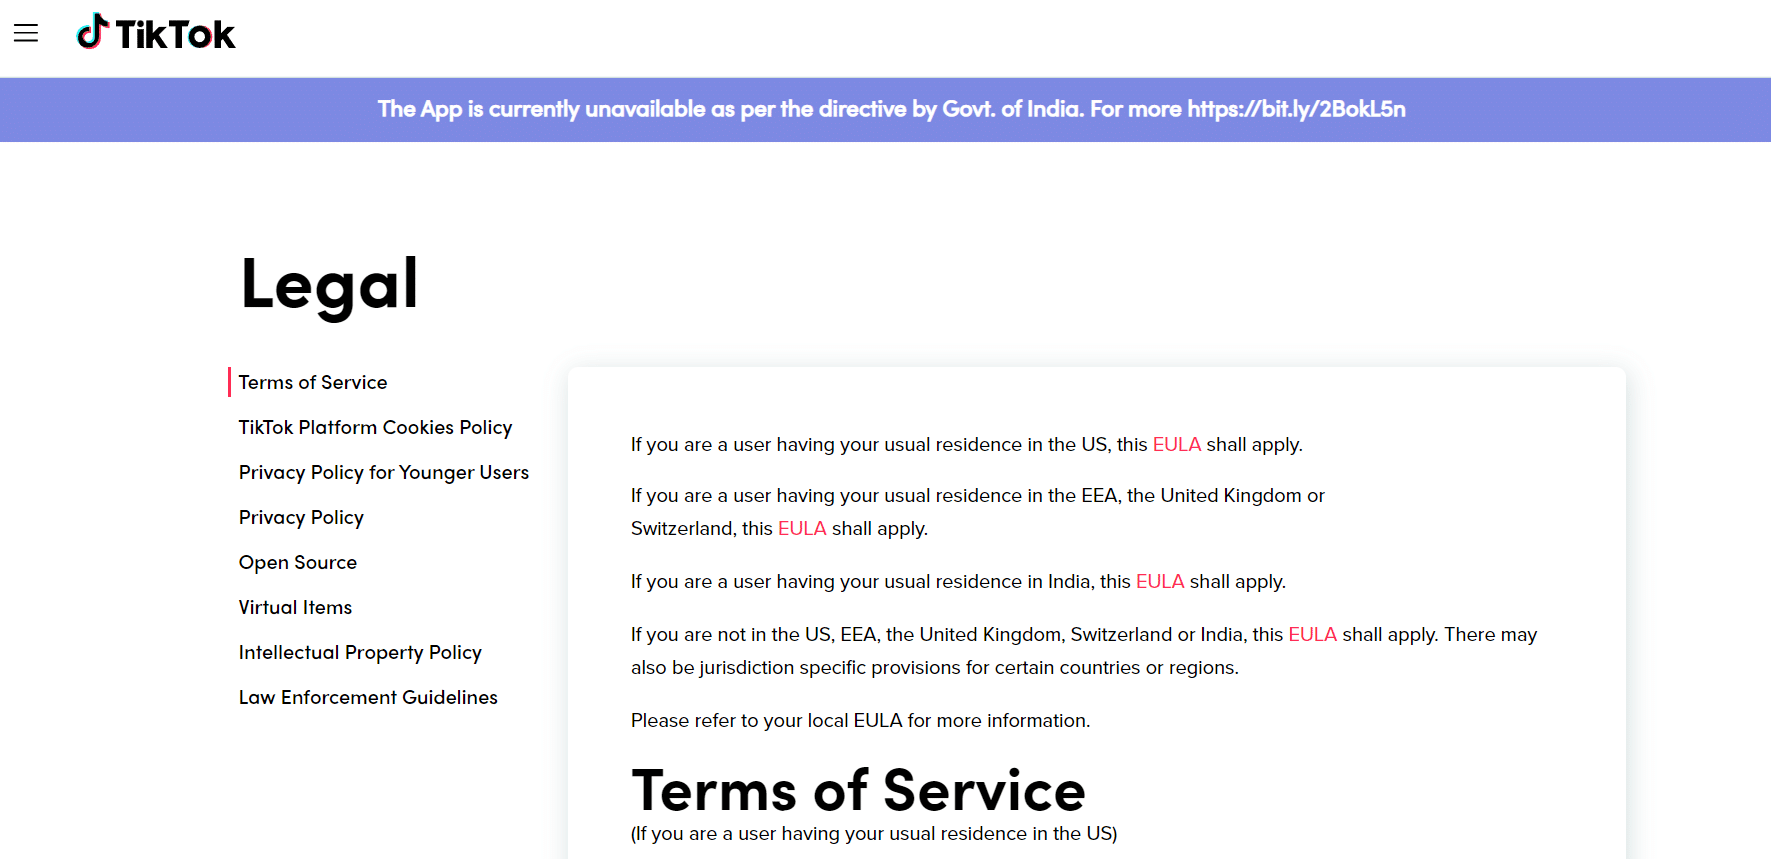 TikTok Terms of Service (TOS)